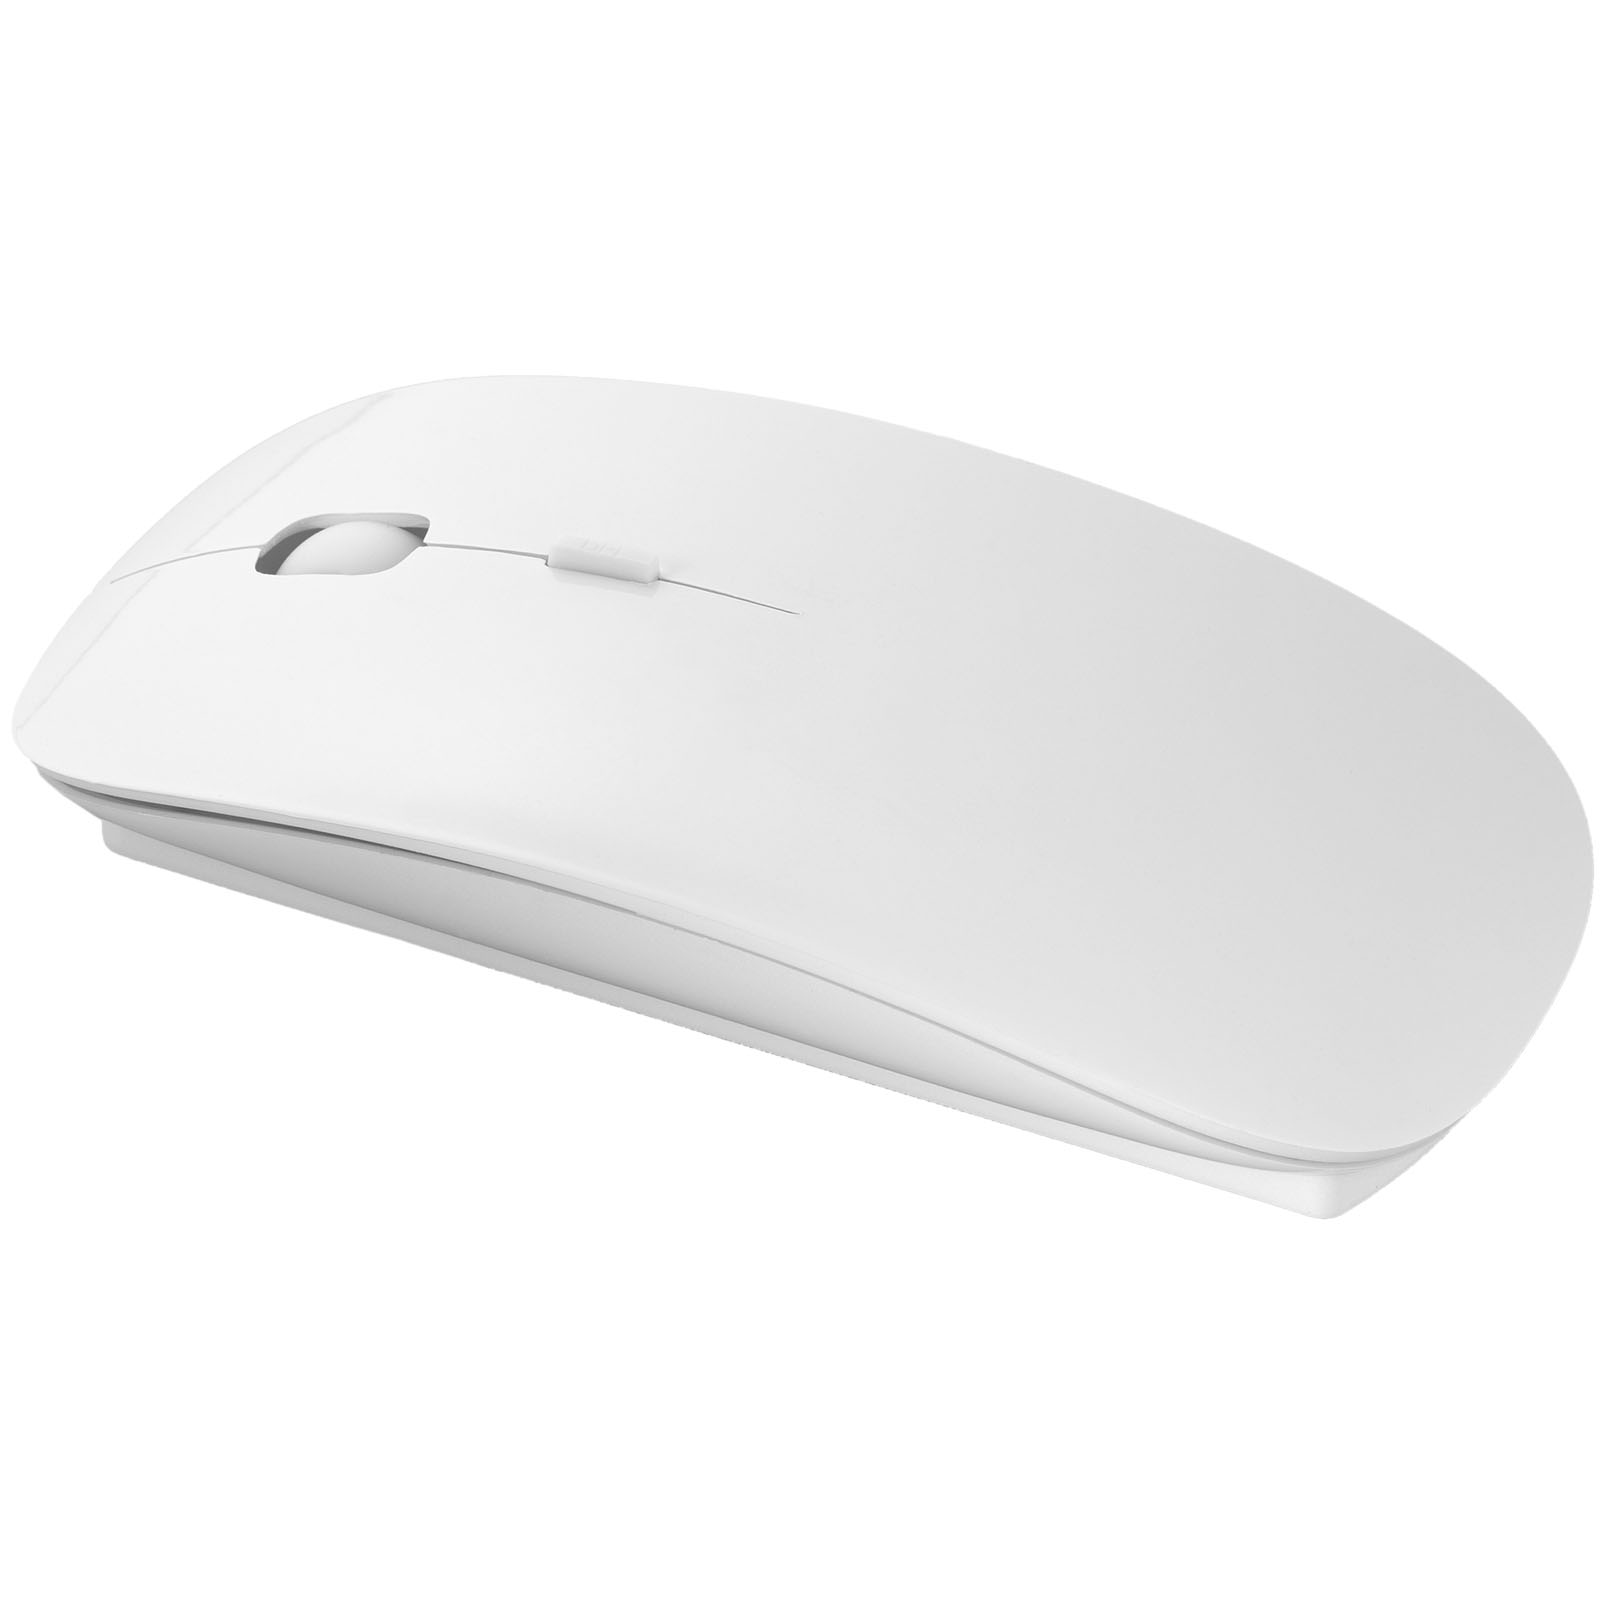 Computer Accessories - Menlo wireless mouse